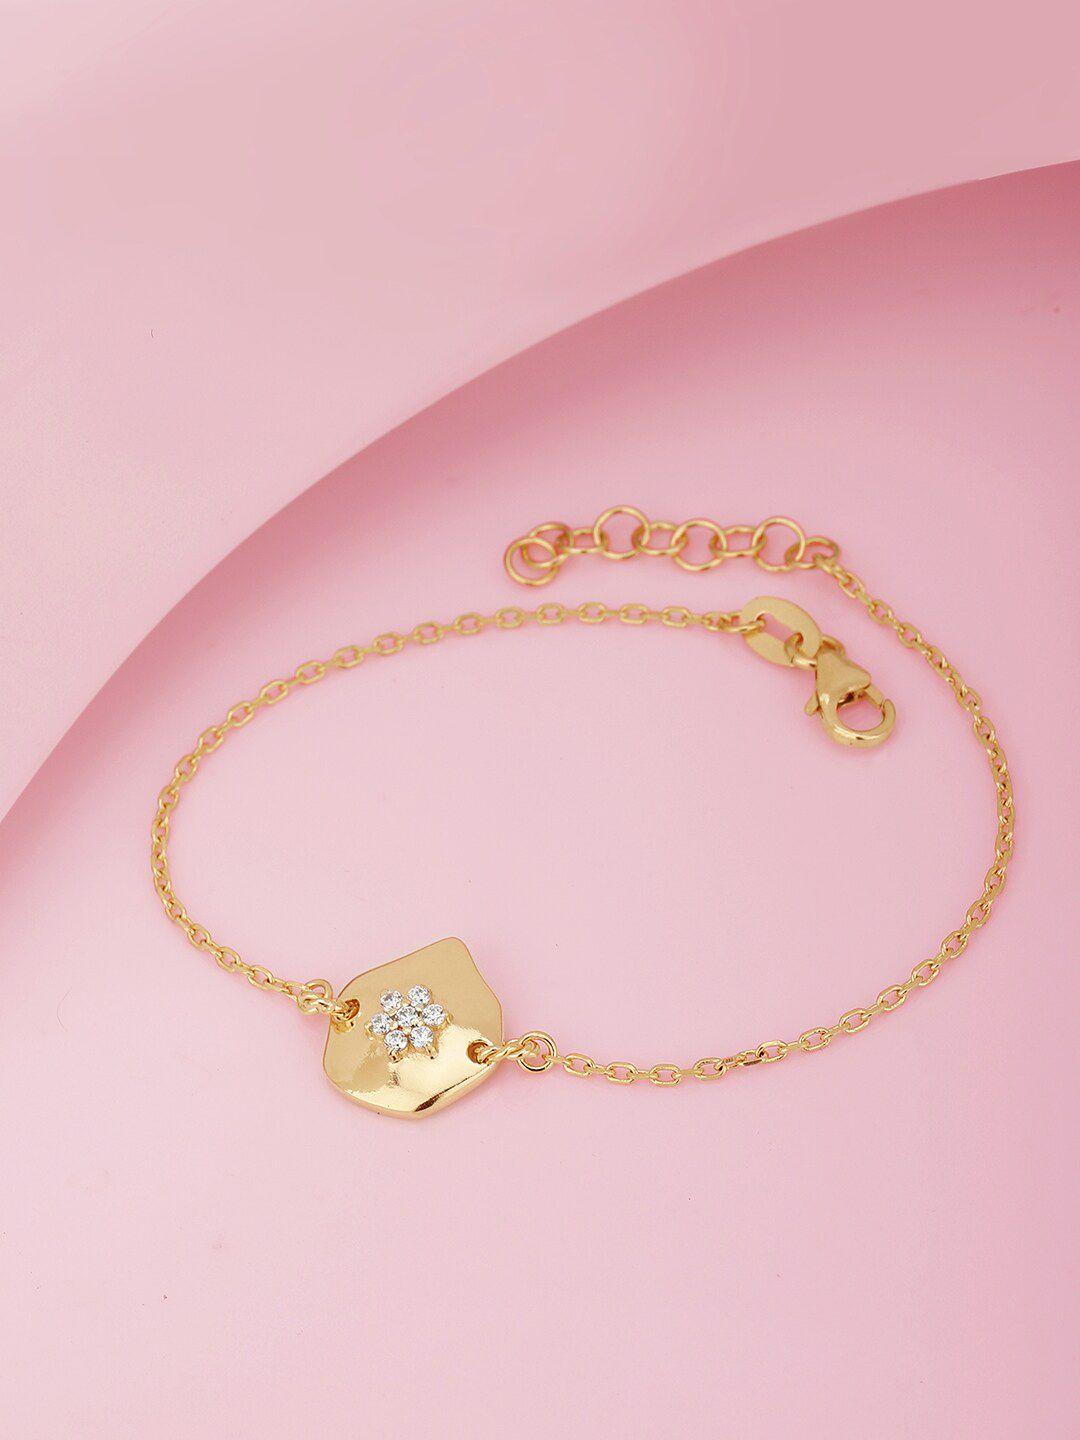 carlton london women gold-plated charm bracelet